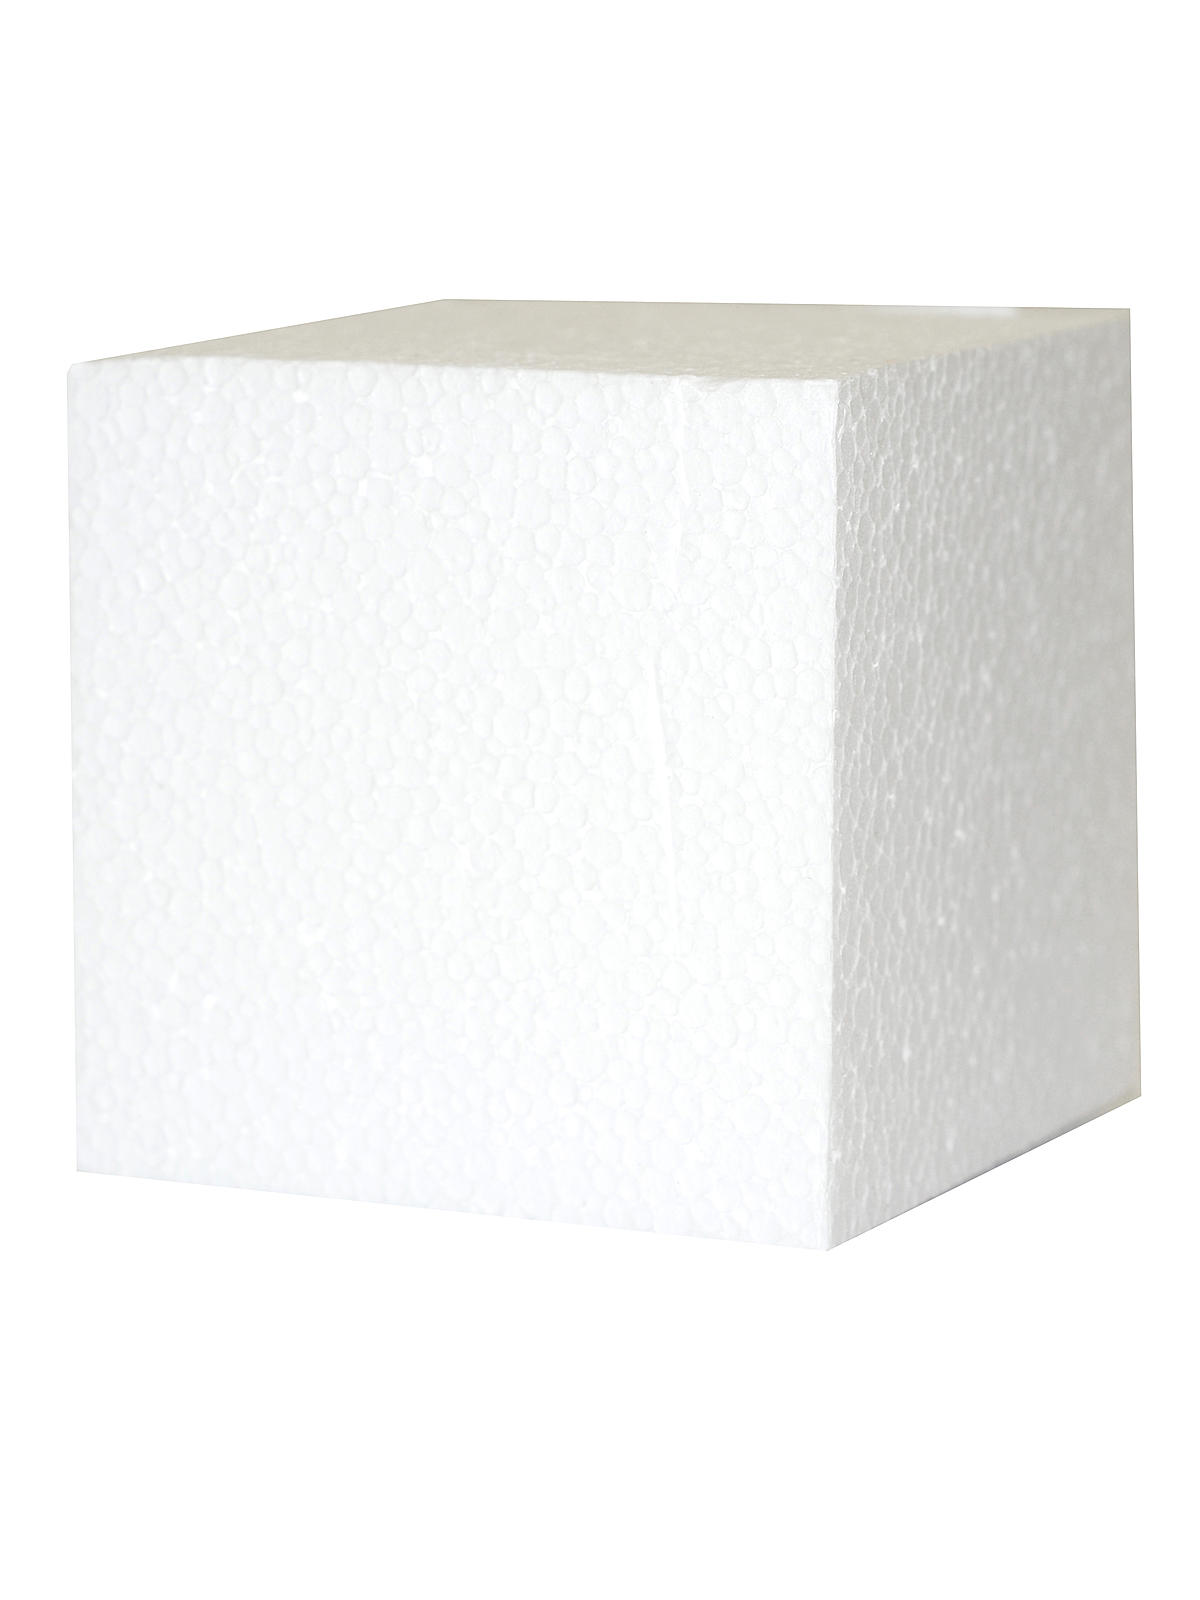 Craft Foam Shapes Cube 3 In. Each